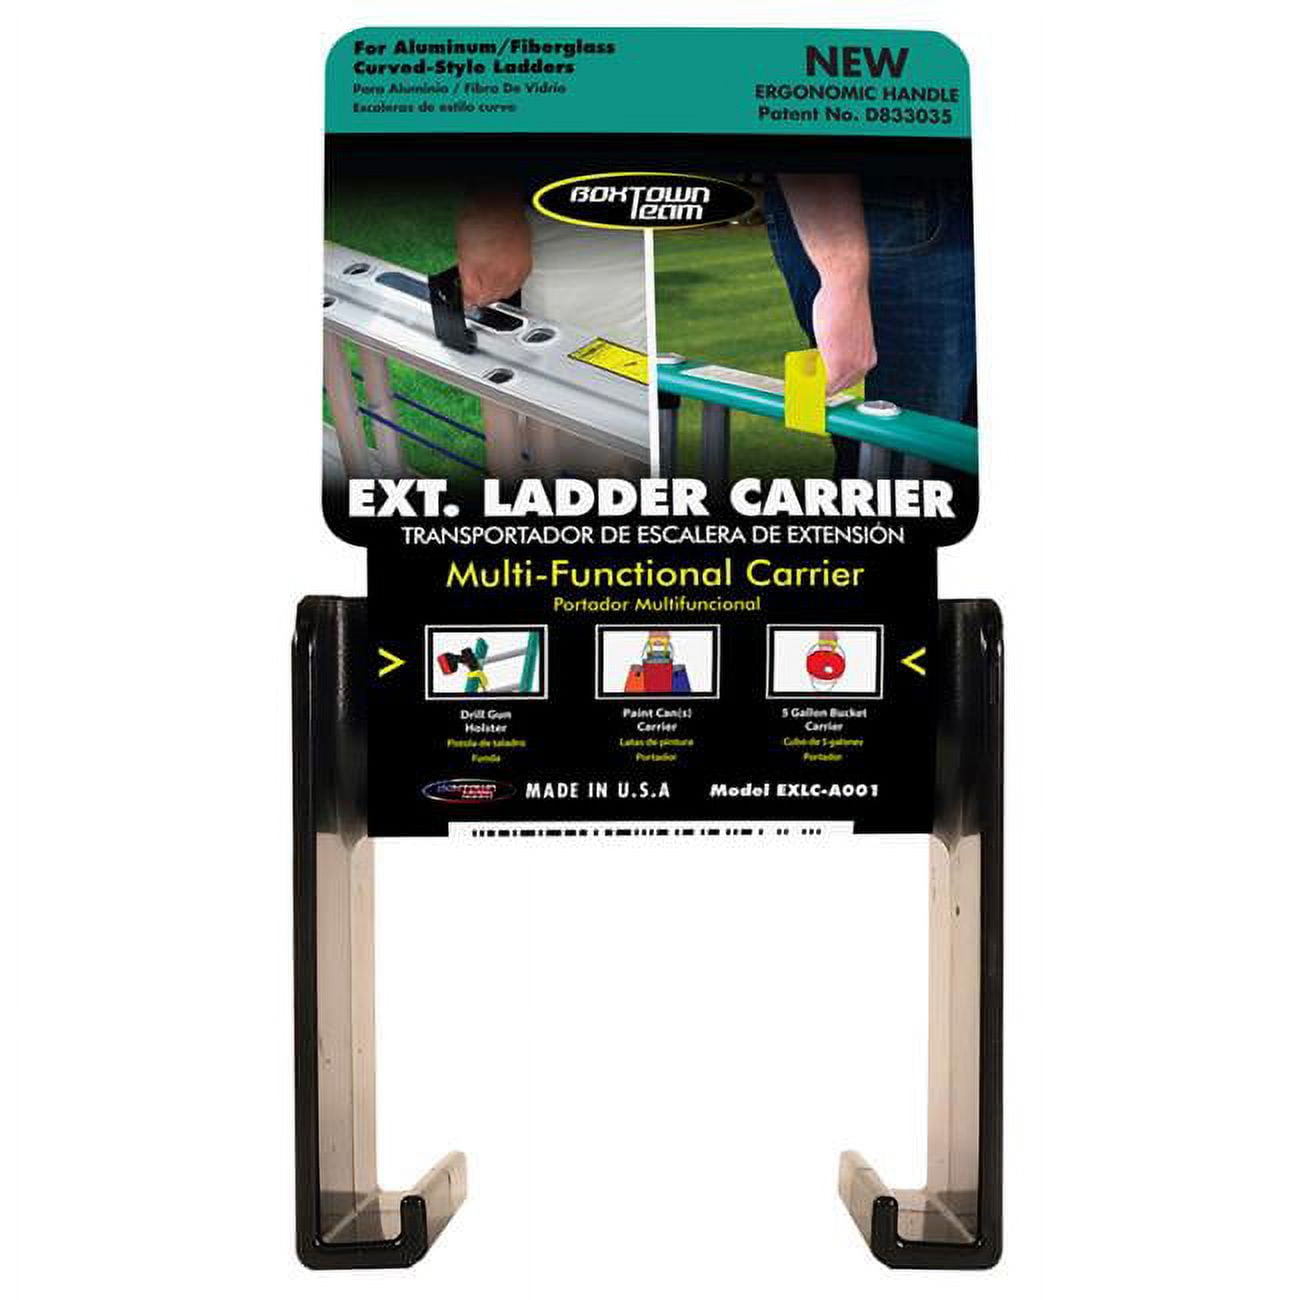 LadderLimb Ladder Paint Bucket Can & Tool Bag Holder Hook Hanger